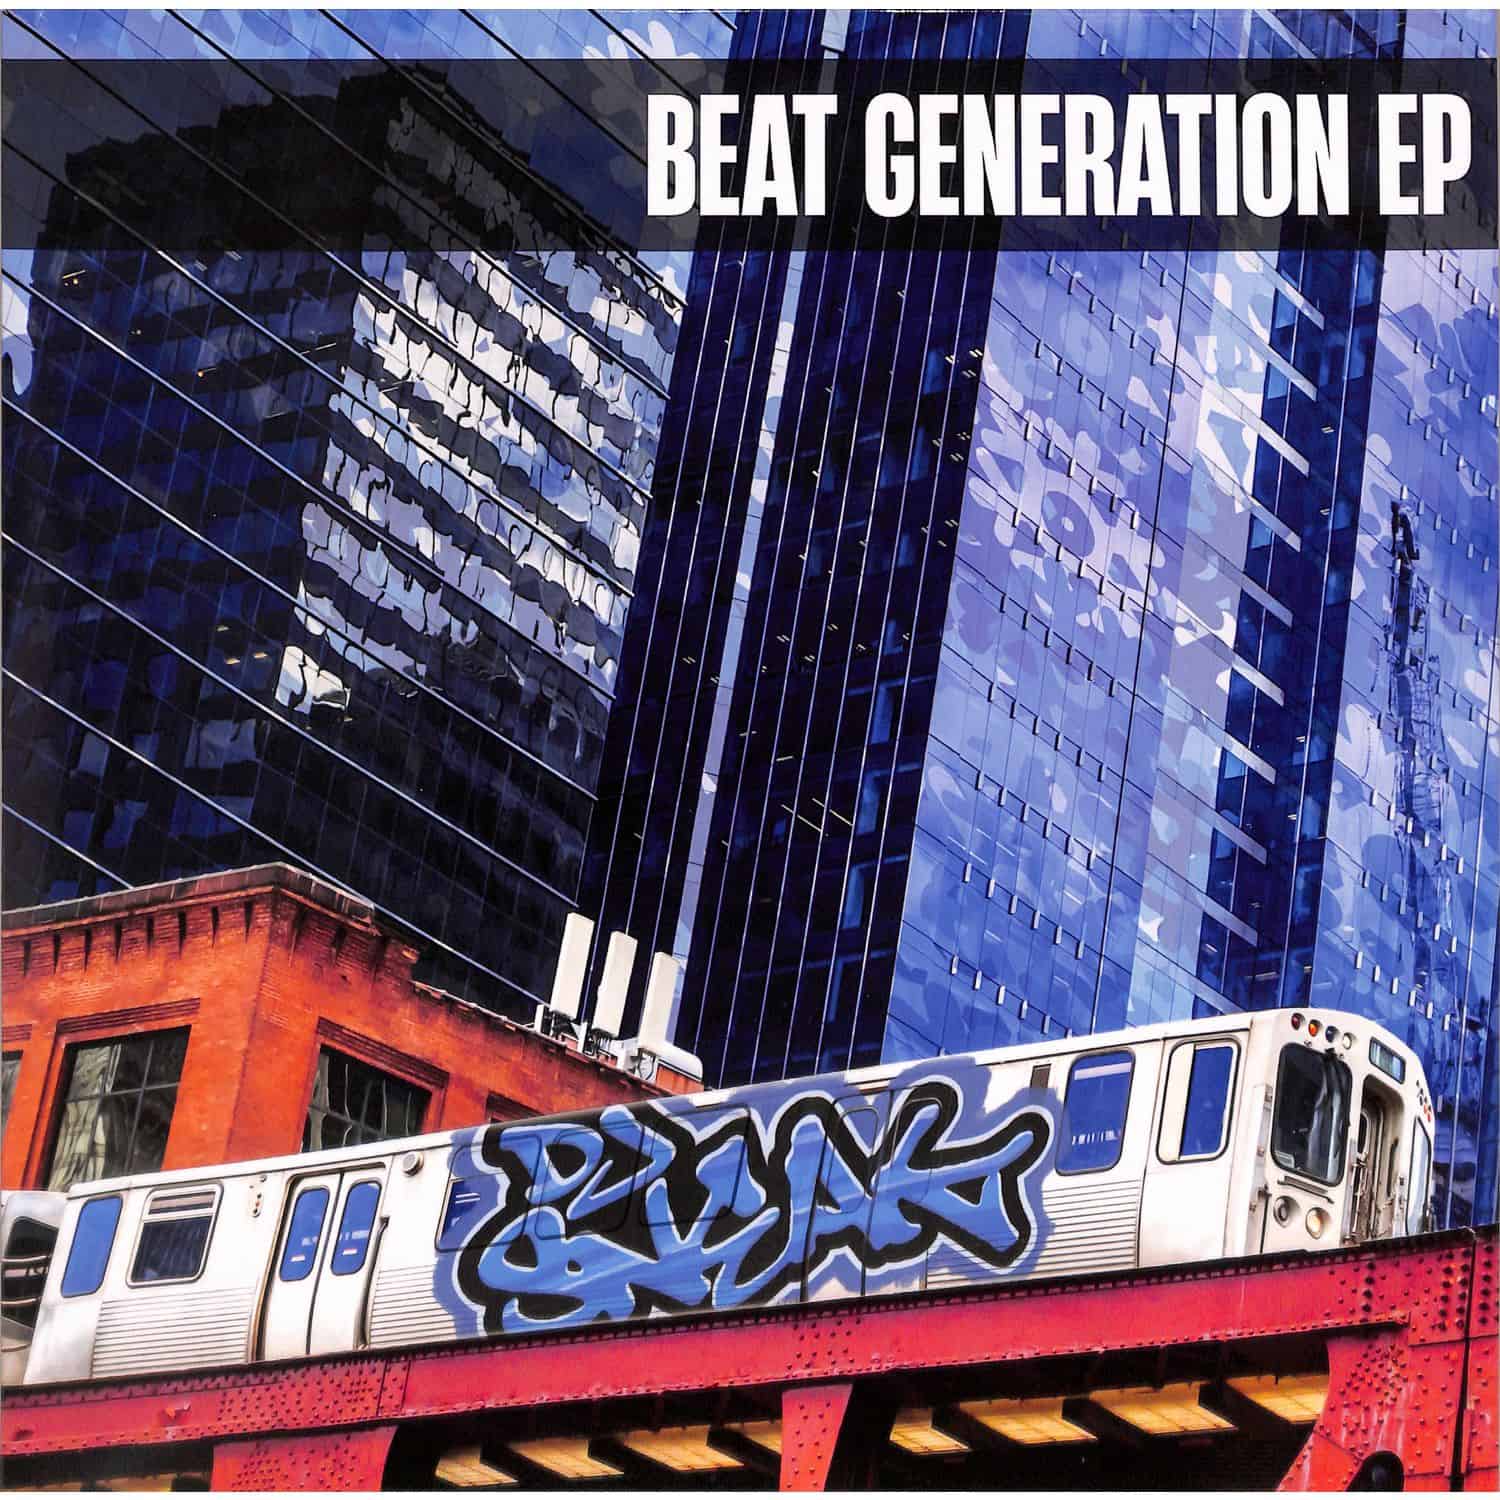 DJ Sneak - BEAT GENERATION EP